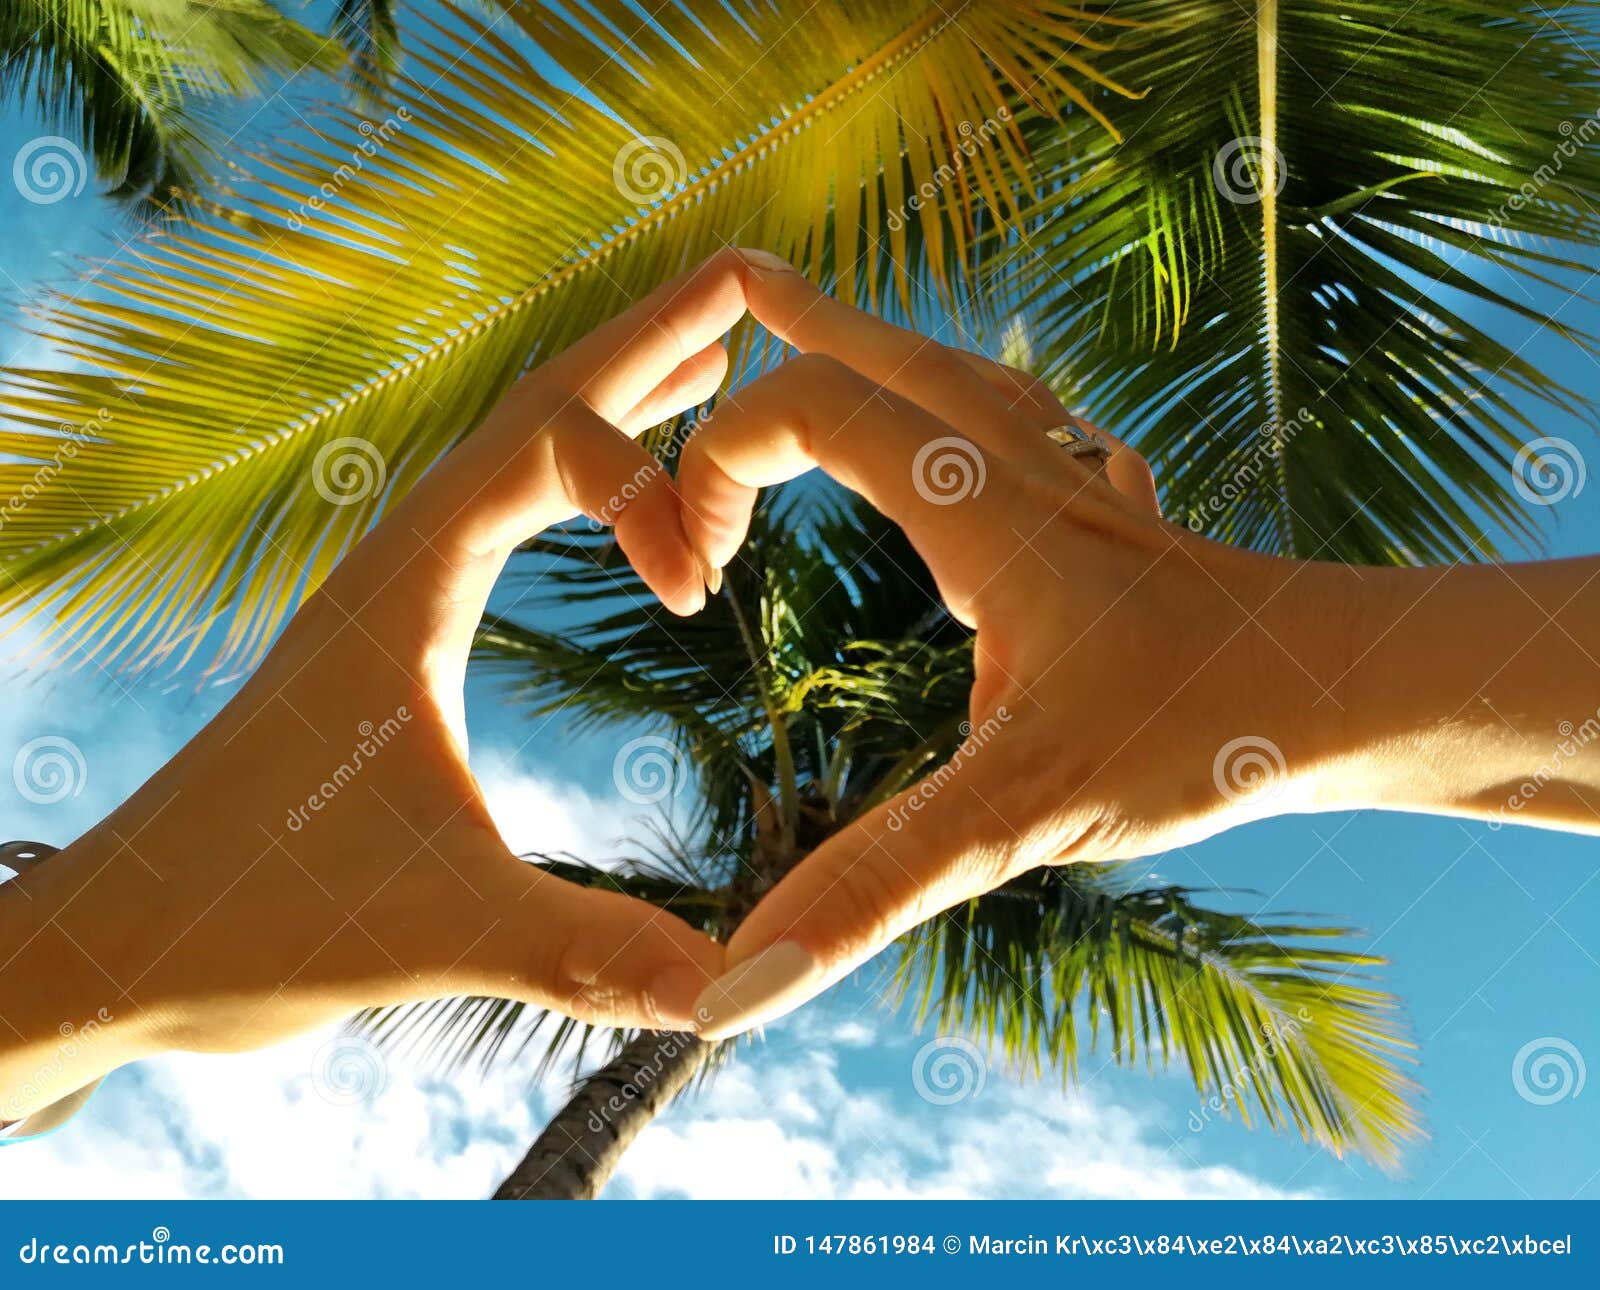 dominican republic, punta cana, mano juan beach. a couple in love doing a heart